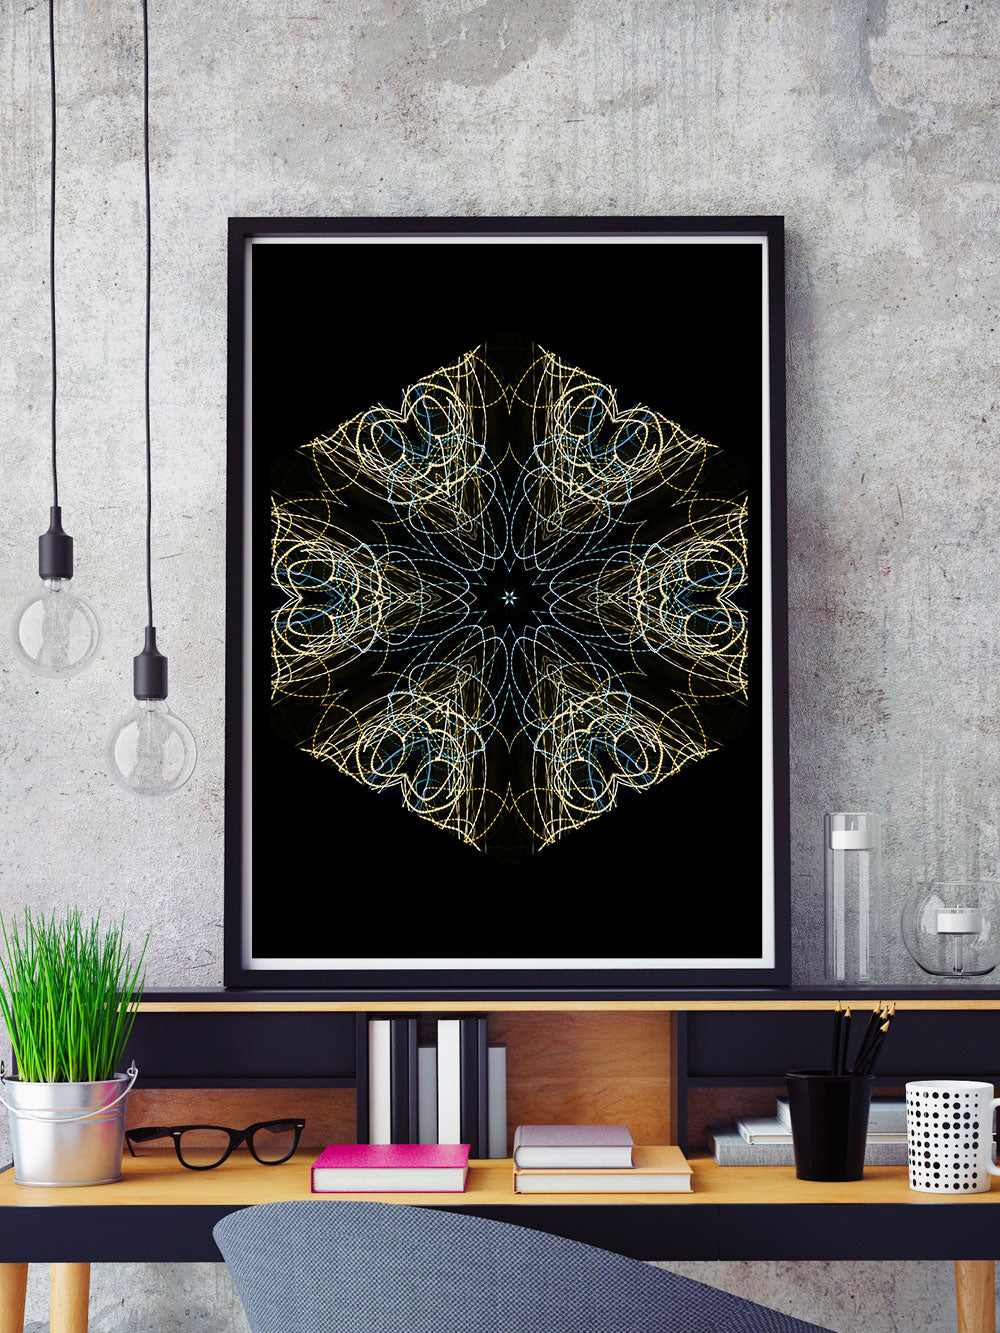 La Planete Sauvage Mandala Print in a frame on a shelf